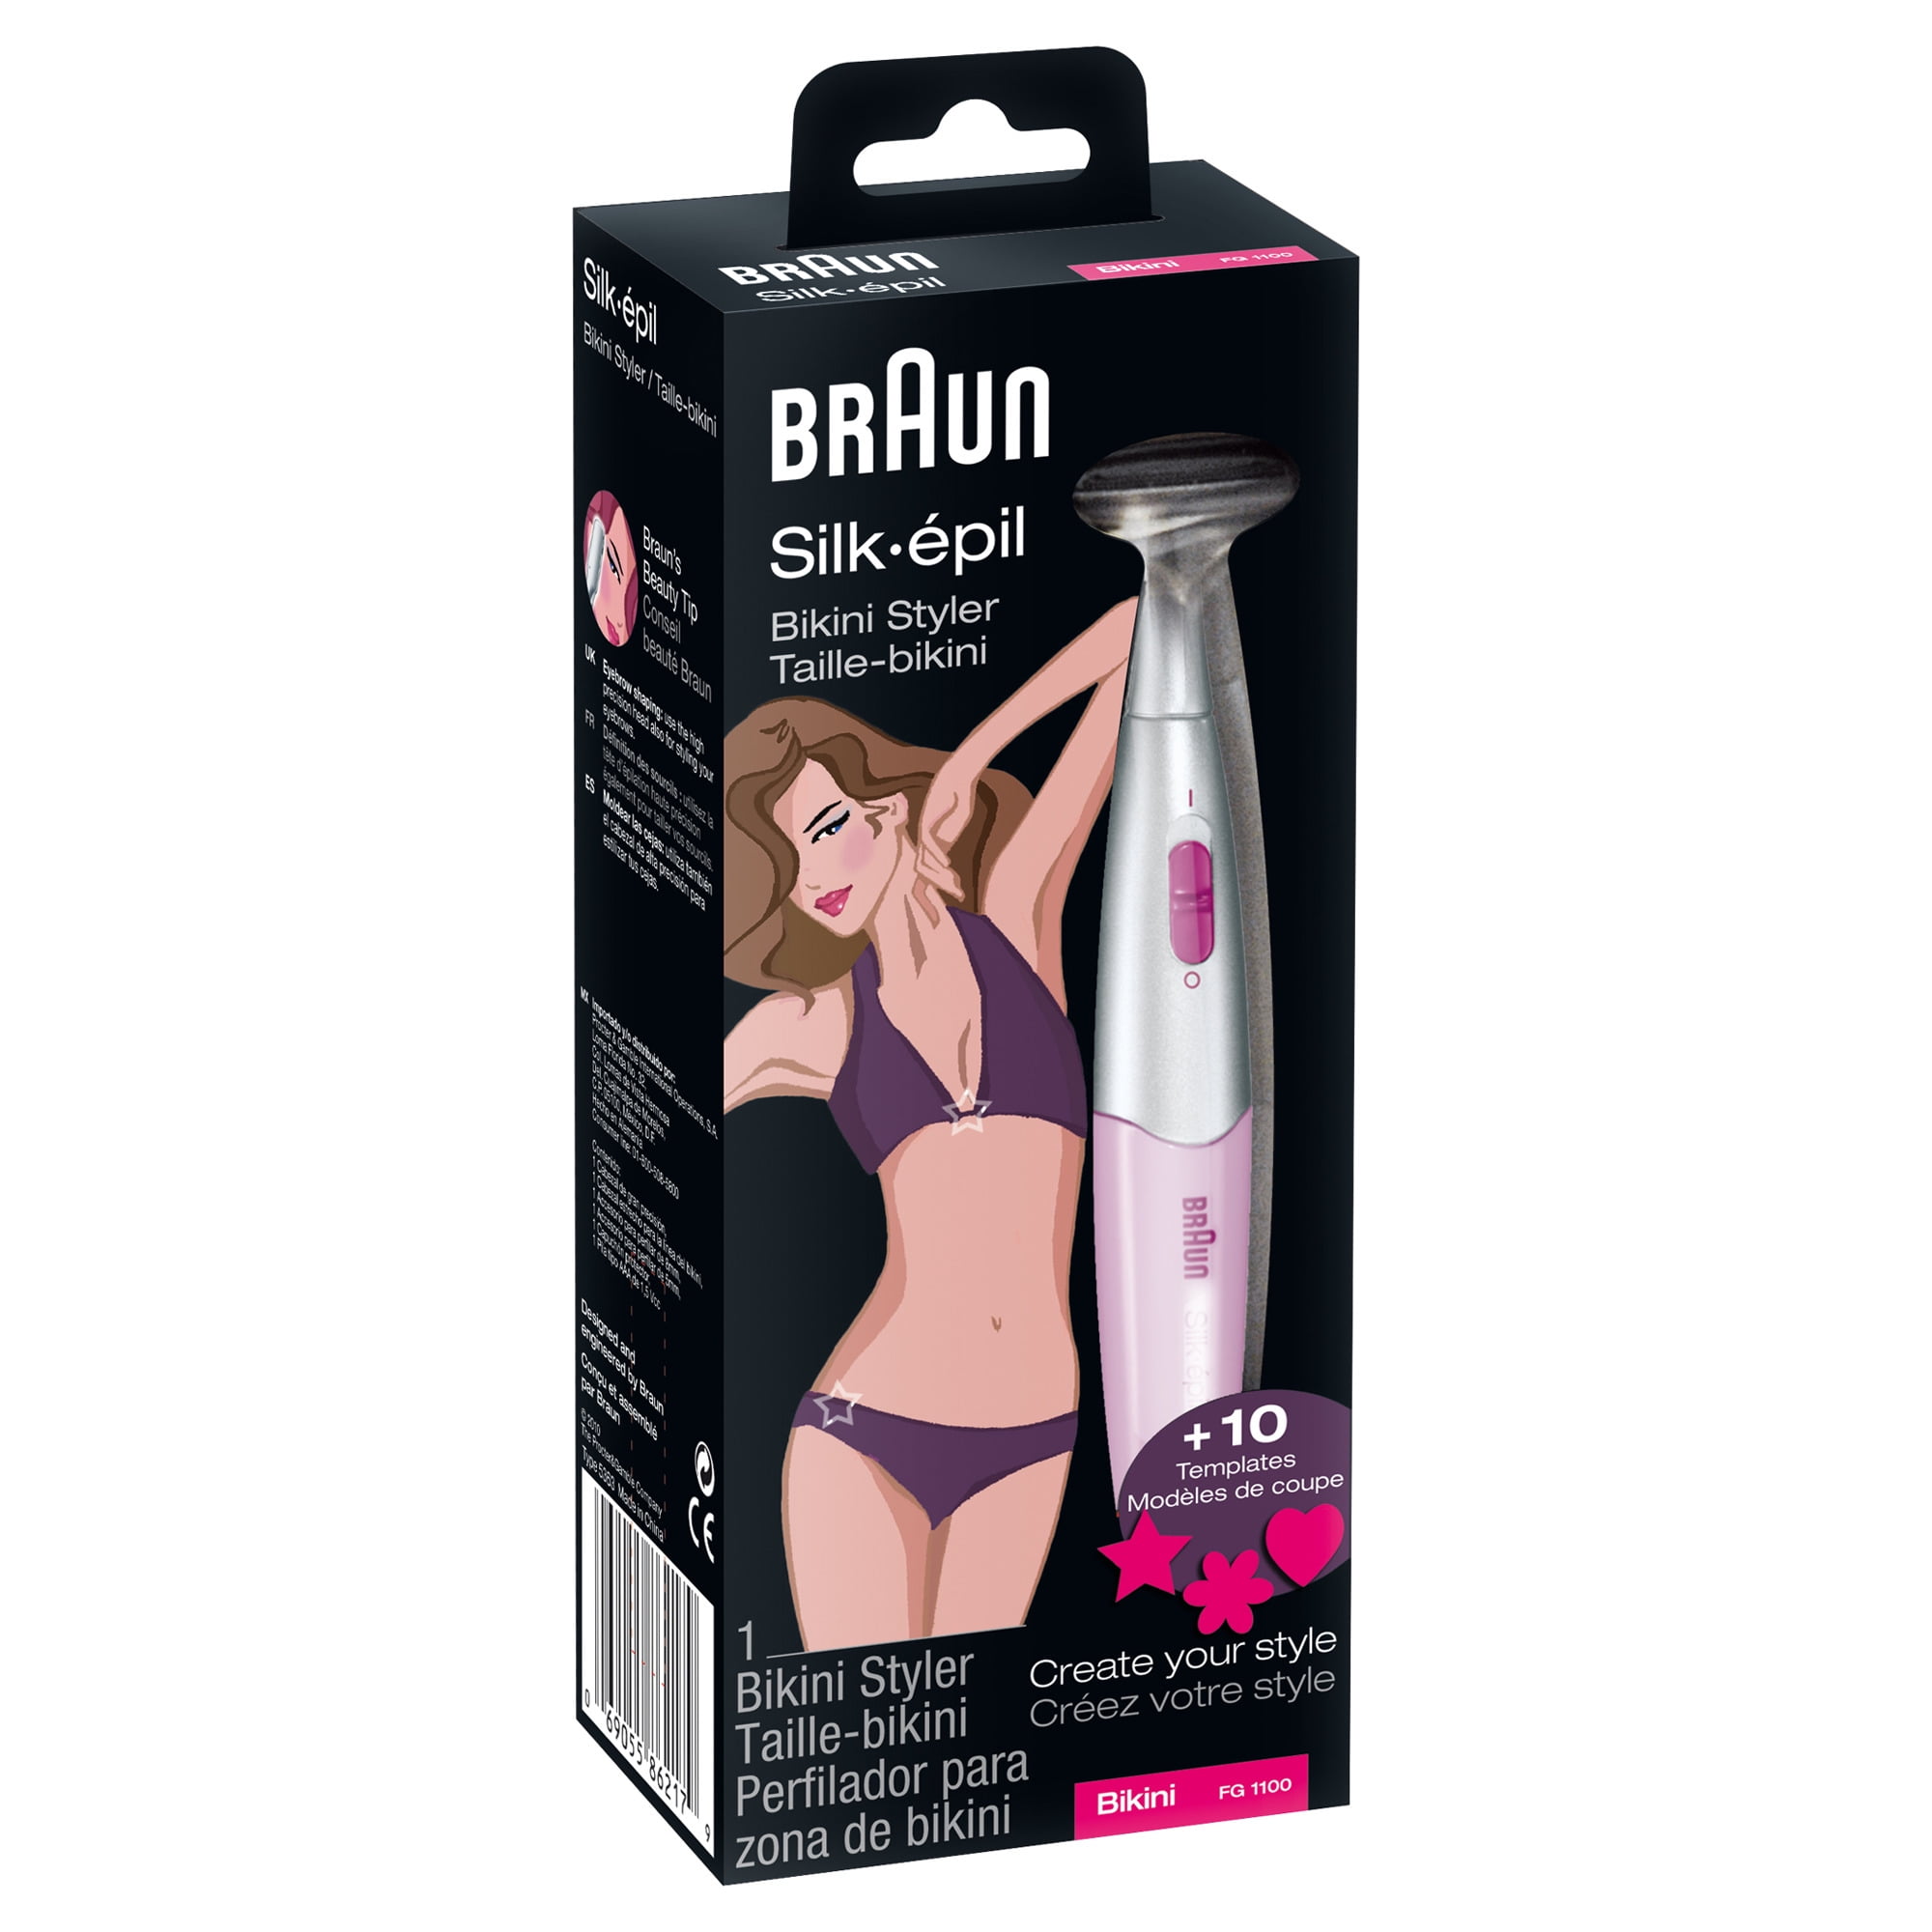 Braun Silk-epil Epilator FG1100 - Precision bikini & styling 4 extras - Walmart.com